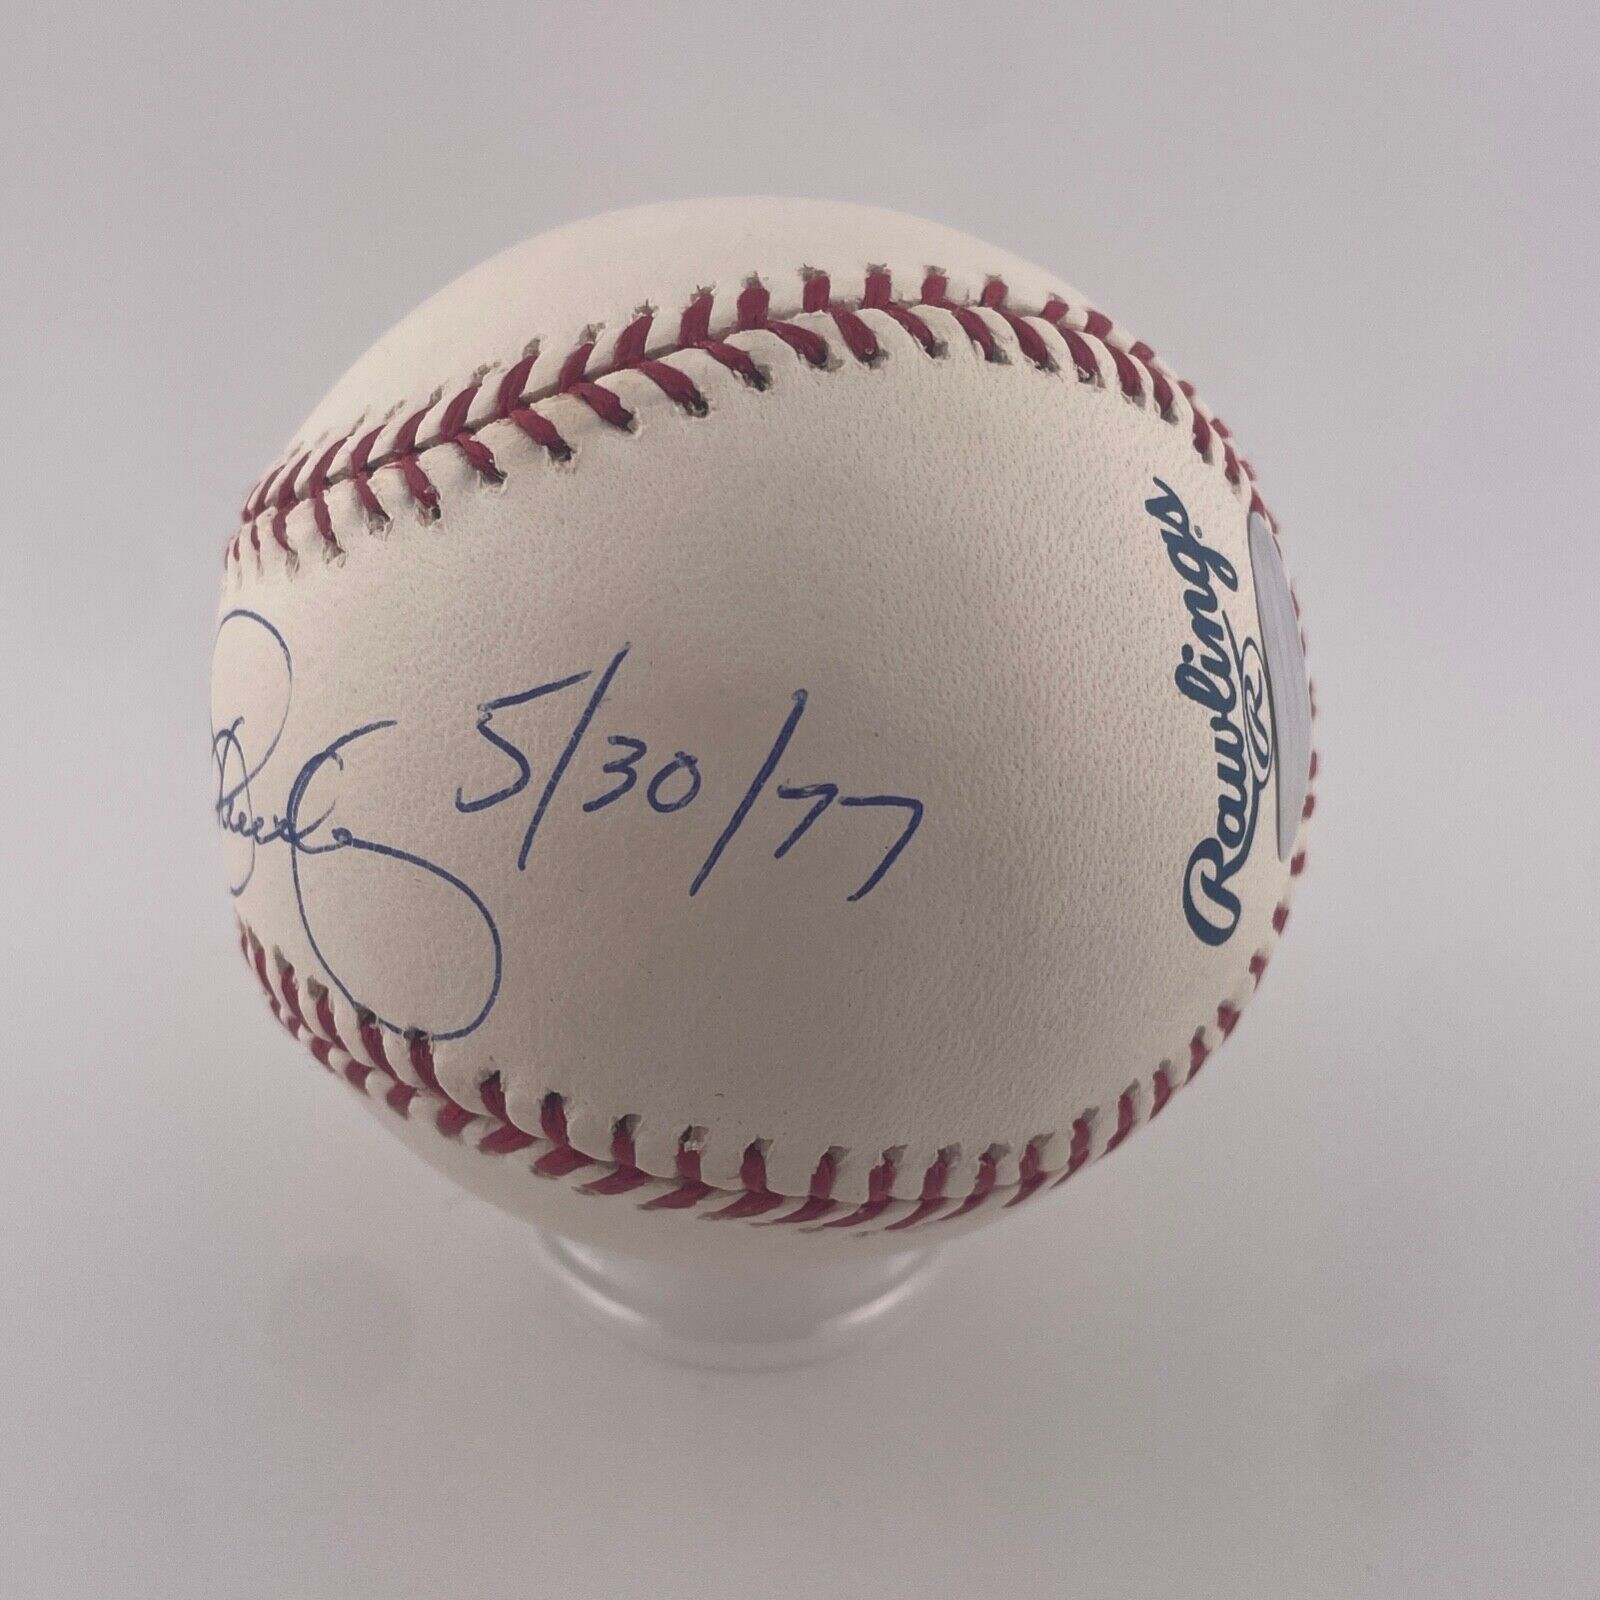 Dennis Eckersley  Signed Inscribed Baseball. &quot;5/30/77&quot;. JSA